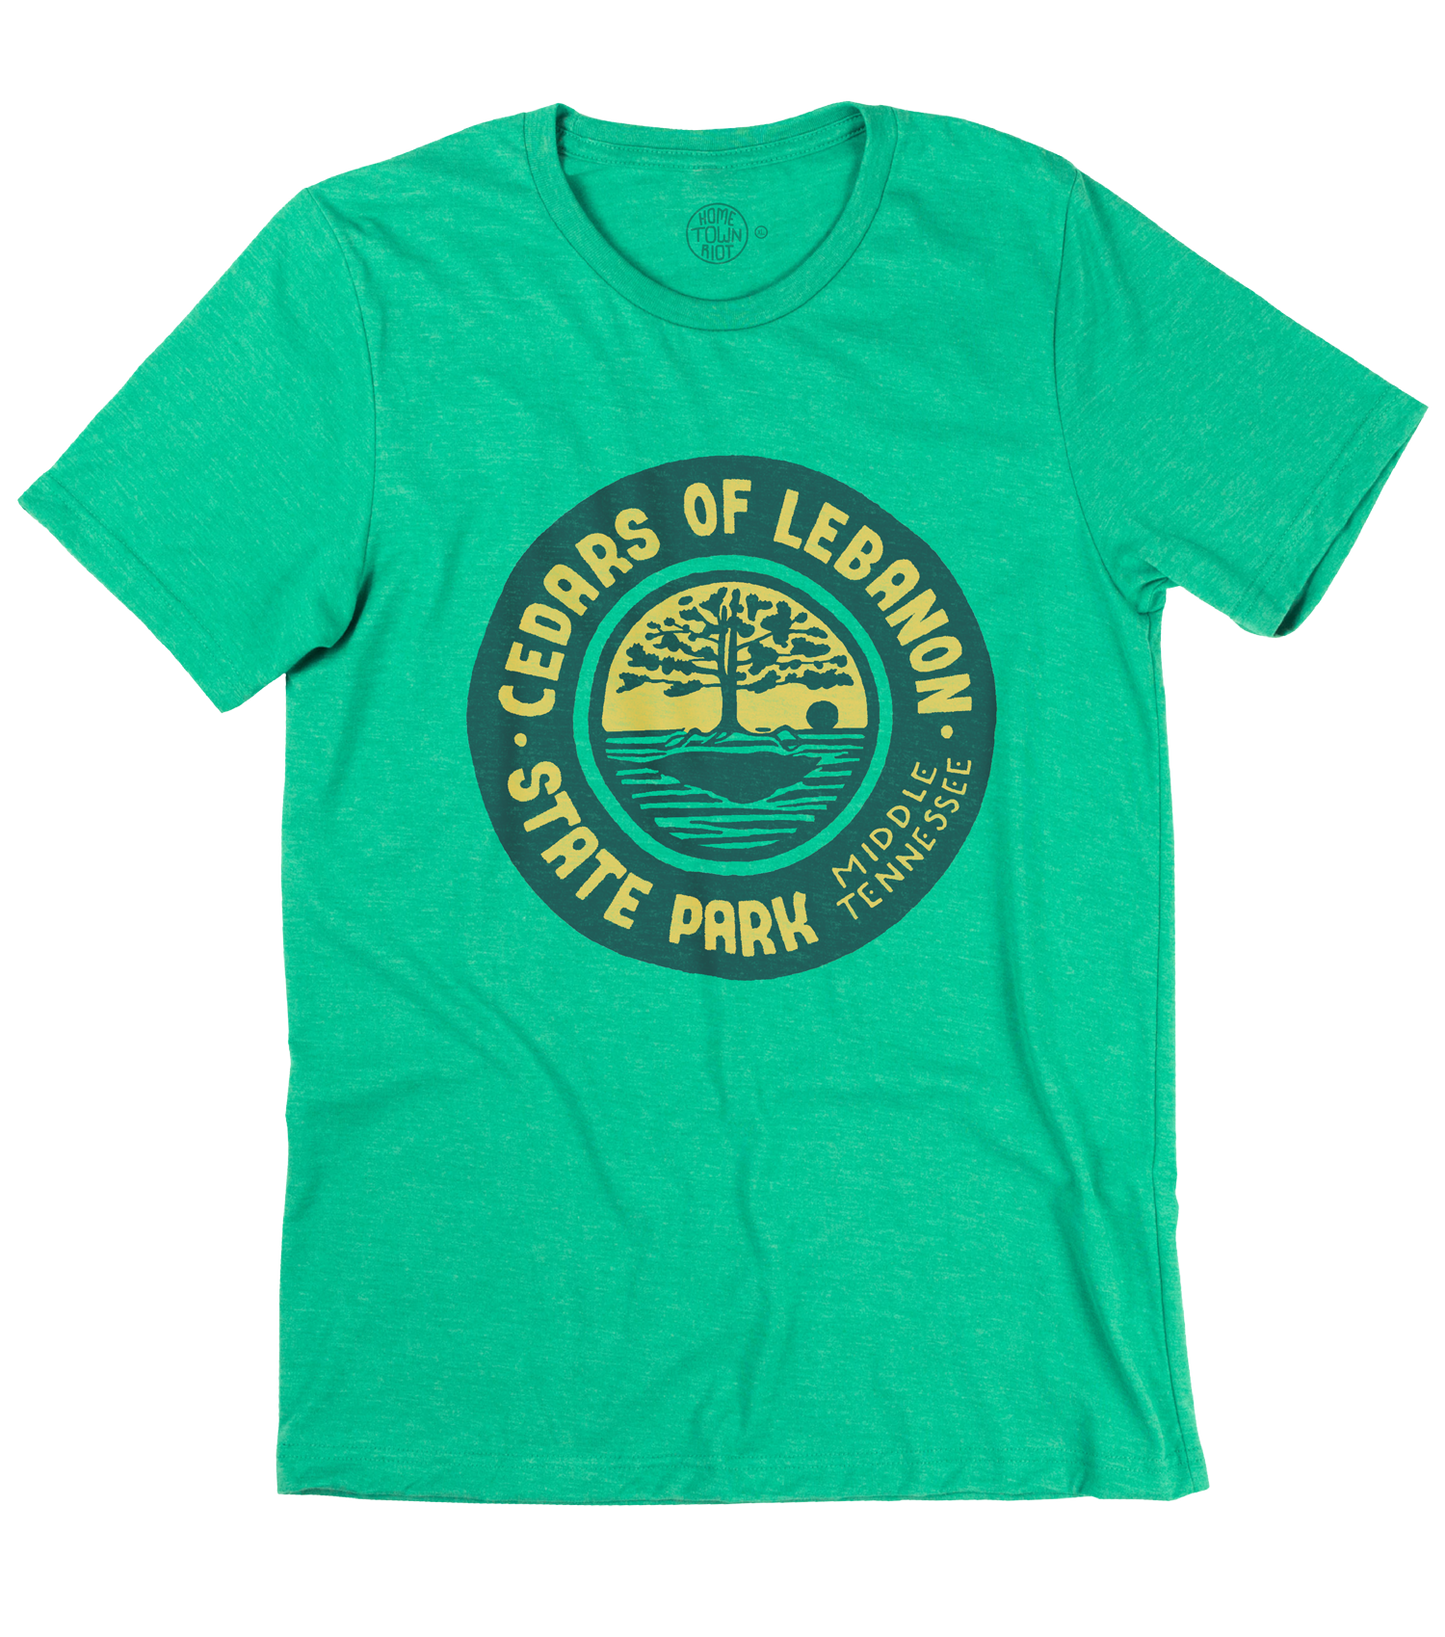 Cedars of Lebanon State Park Shirt